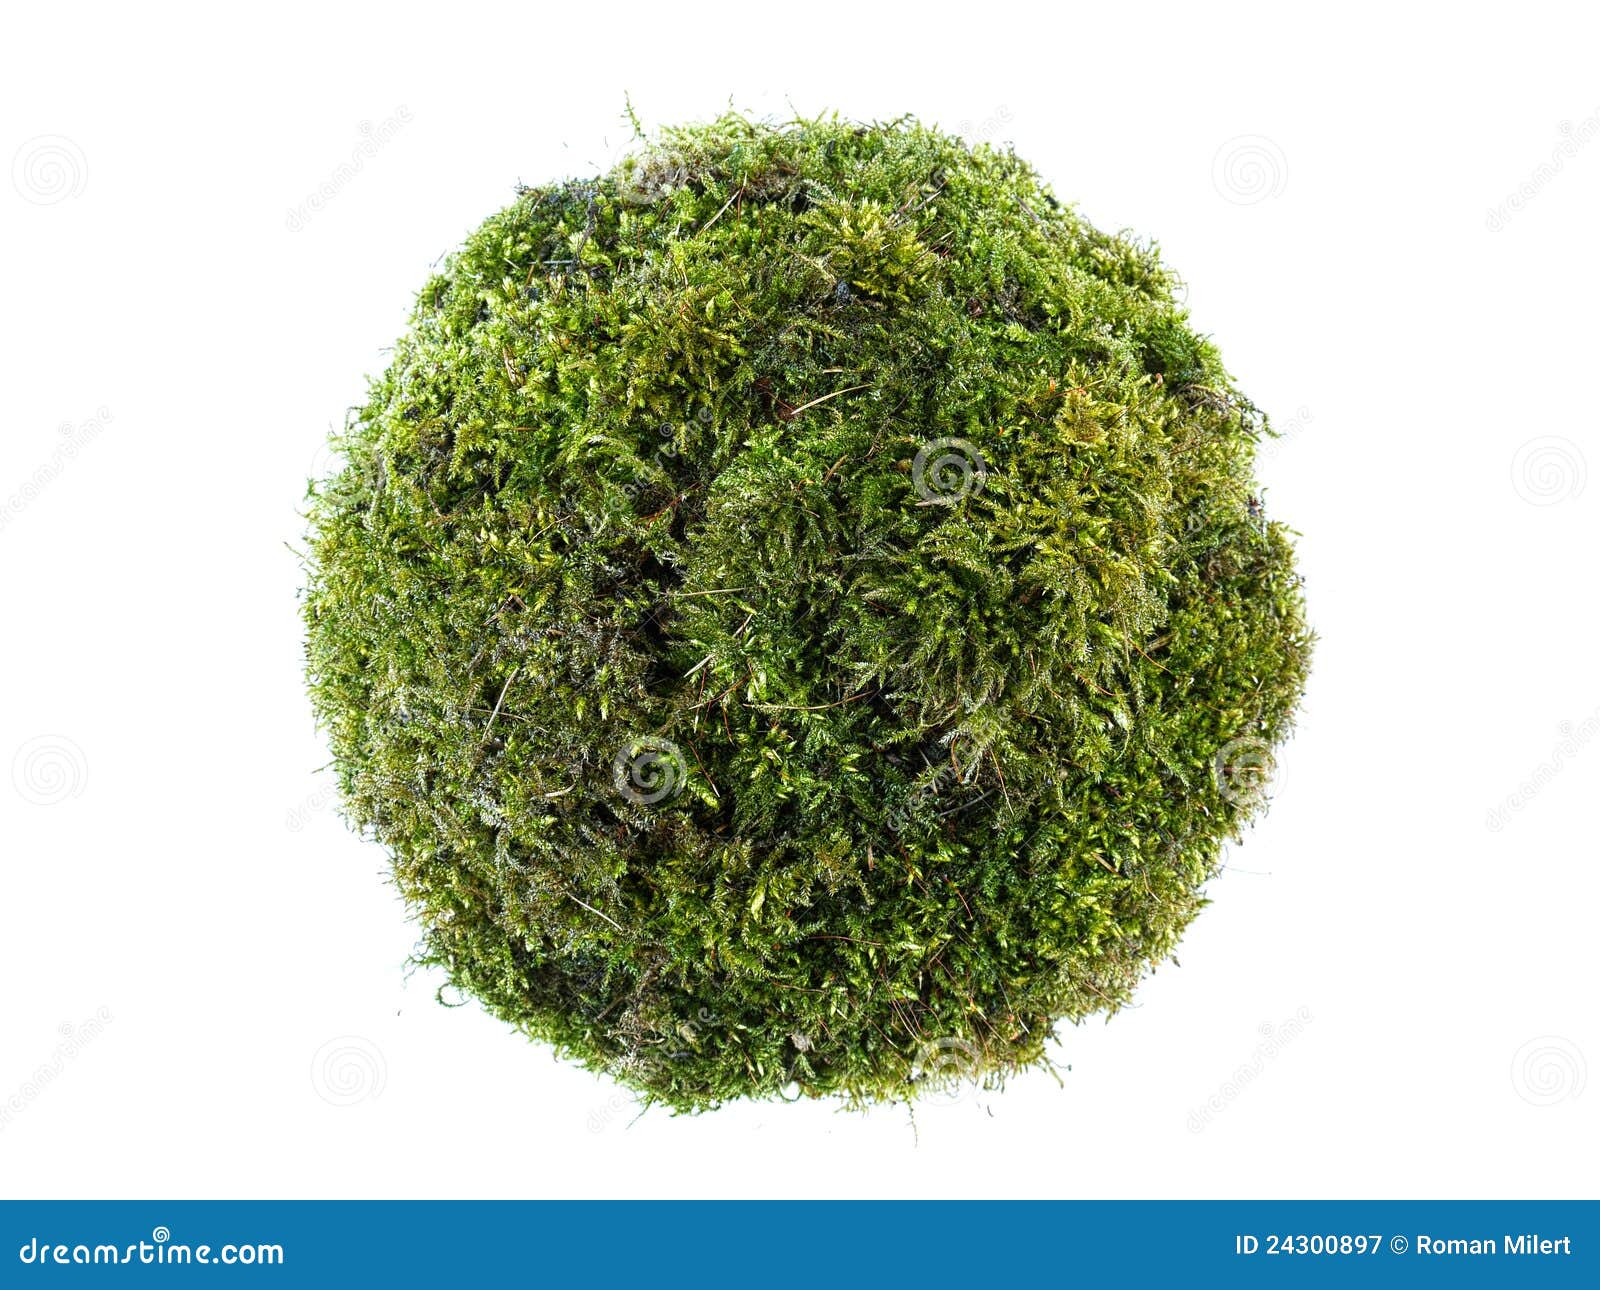 moss sphere